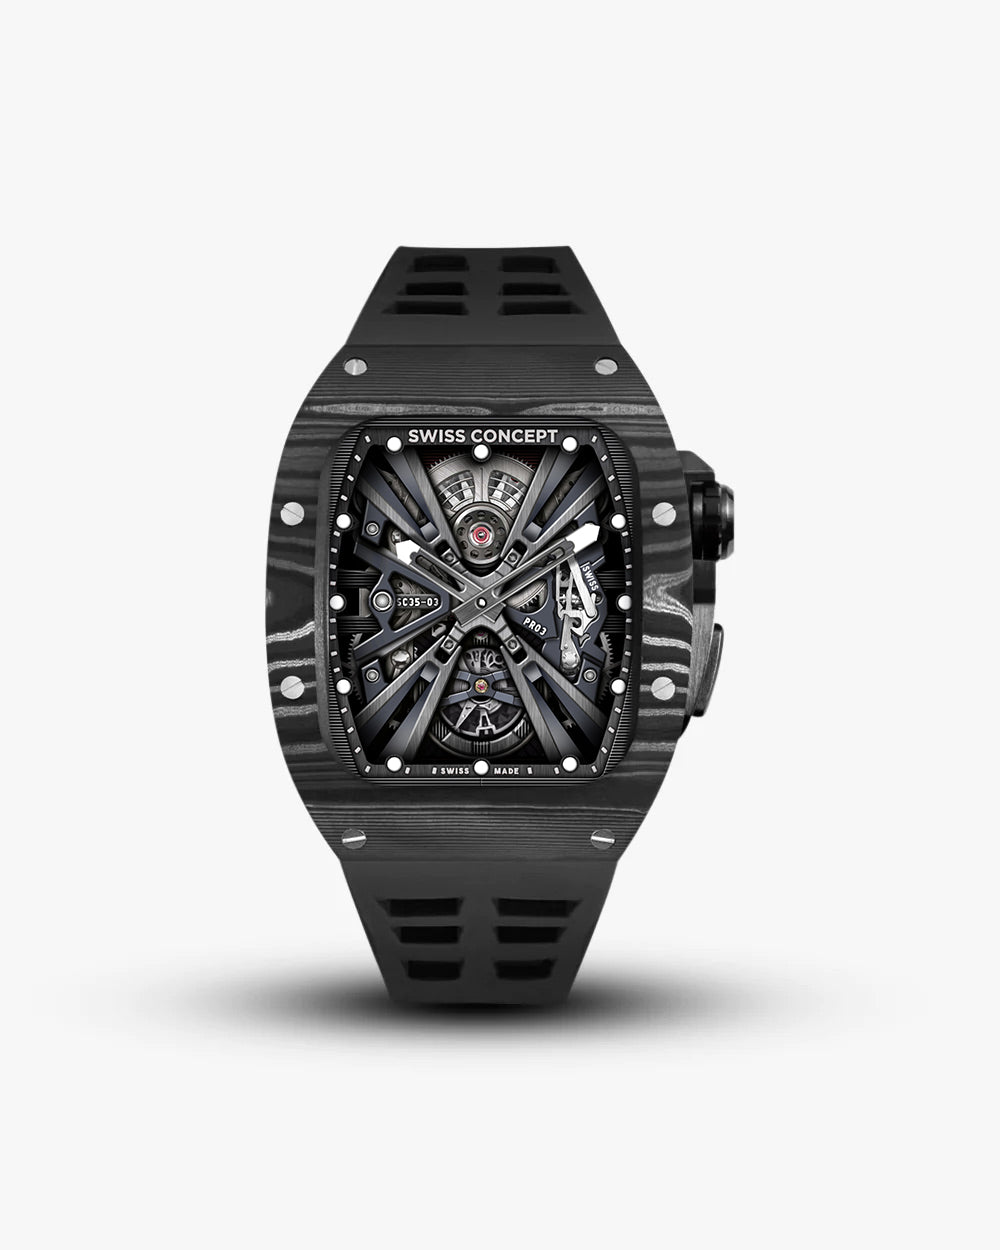 Swiss Concept Racing Elite Edition Nero Forged Carbon, Matte Black & Onyx Black Apple Watch Case - Swiss Design